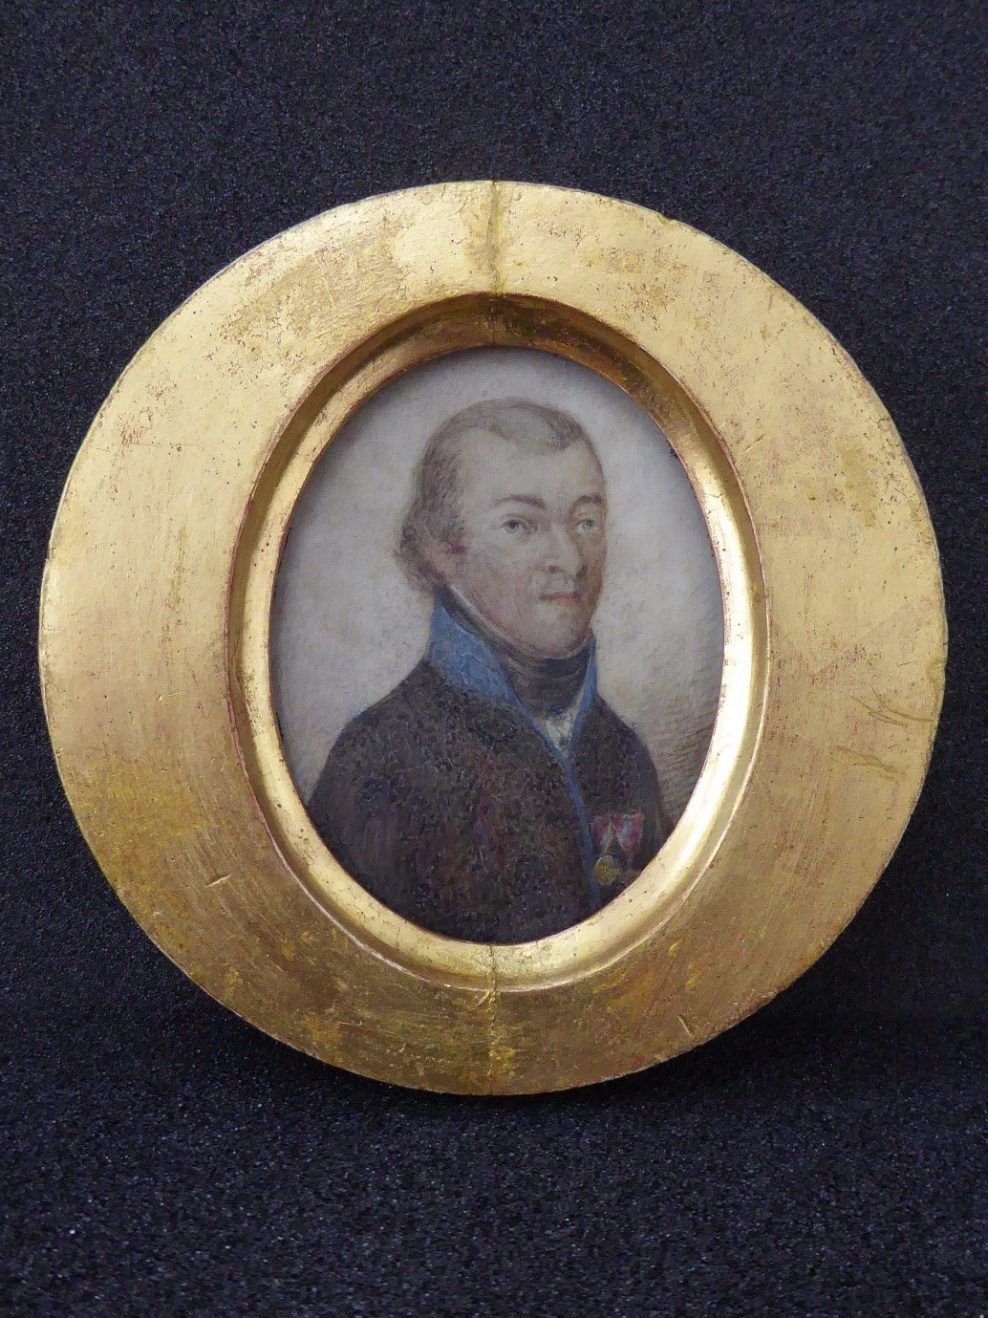 Portrait Miniature of Baron Josef Otto Stockar von Bernkopf by an Unknown Artist, Private Collection